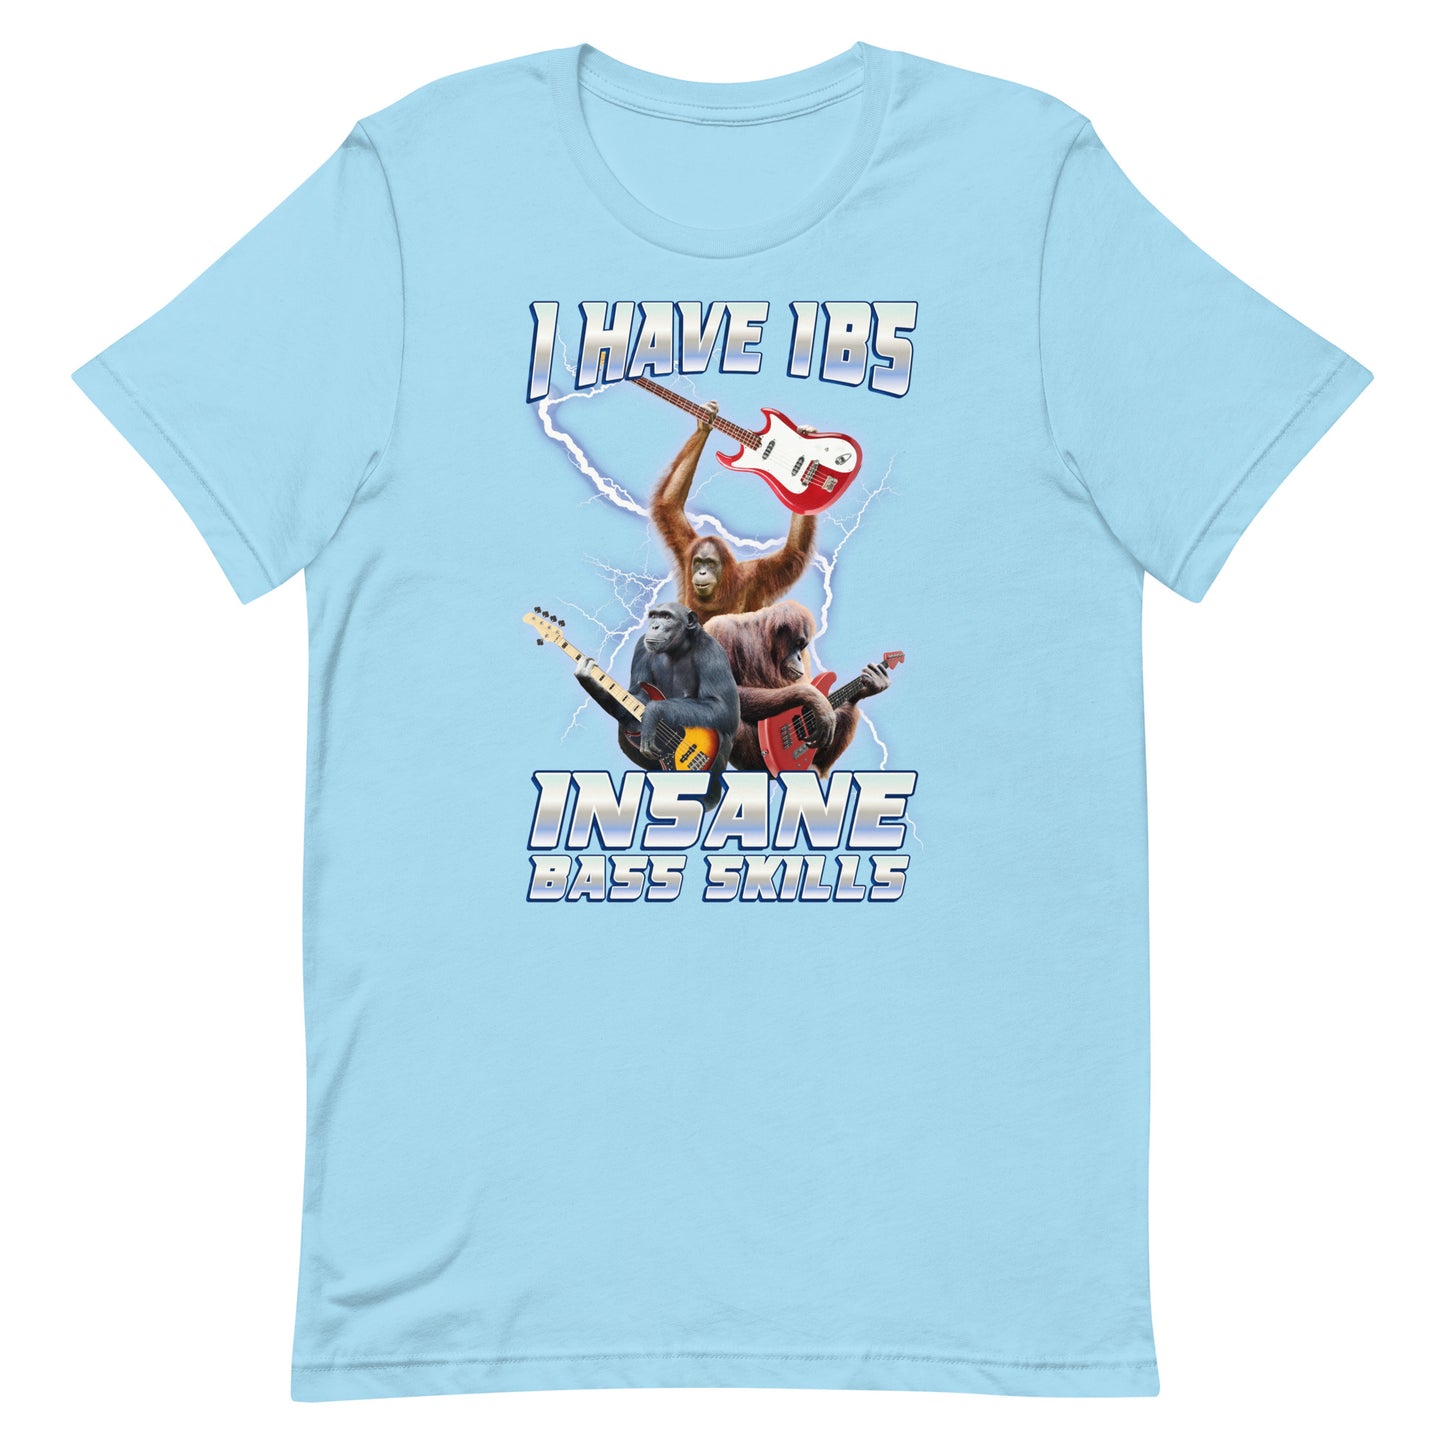 I Have IBS (Insane Bass Skills) Unisex t-shirt